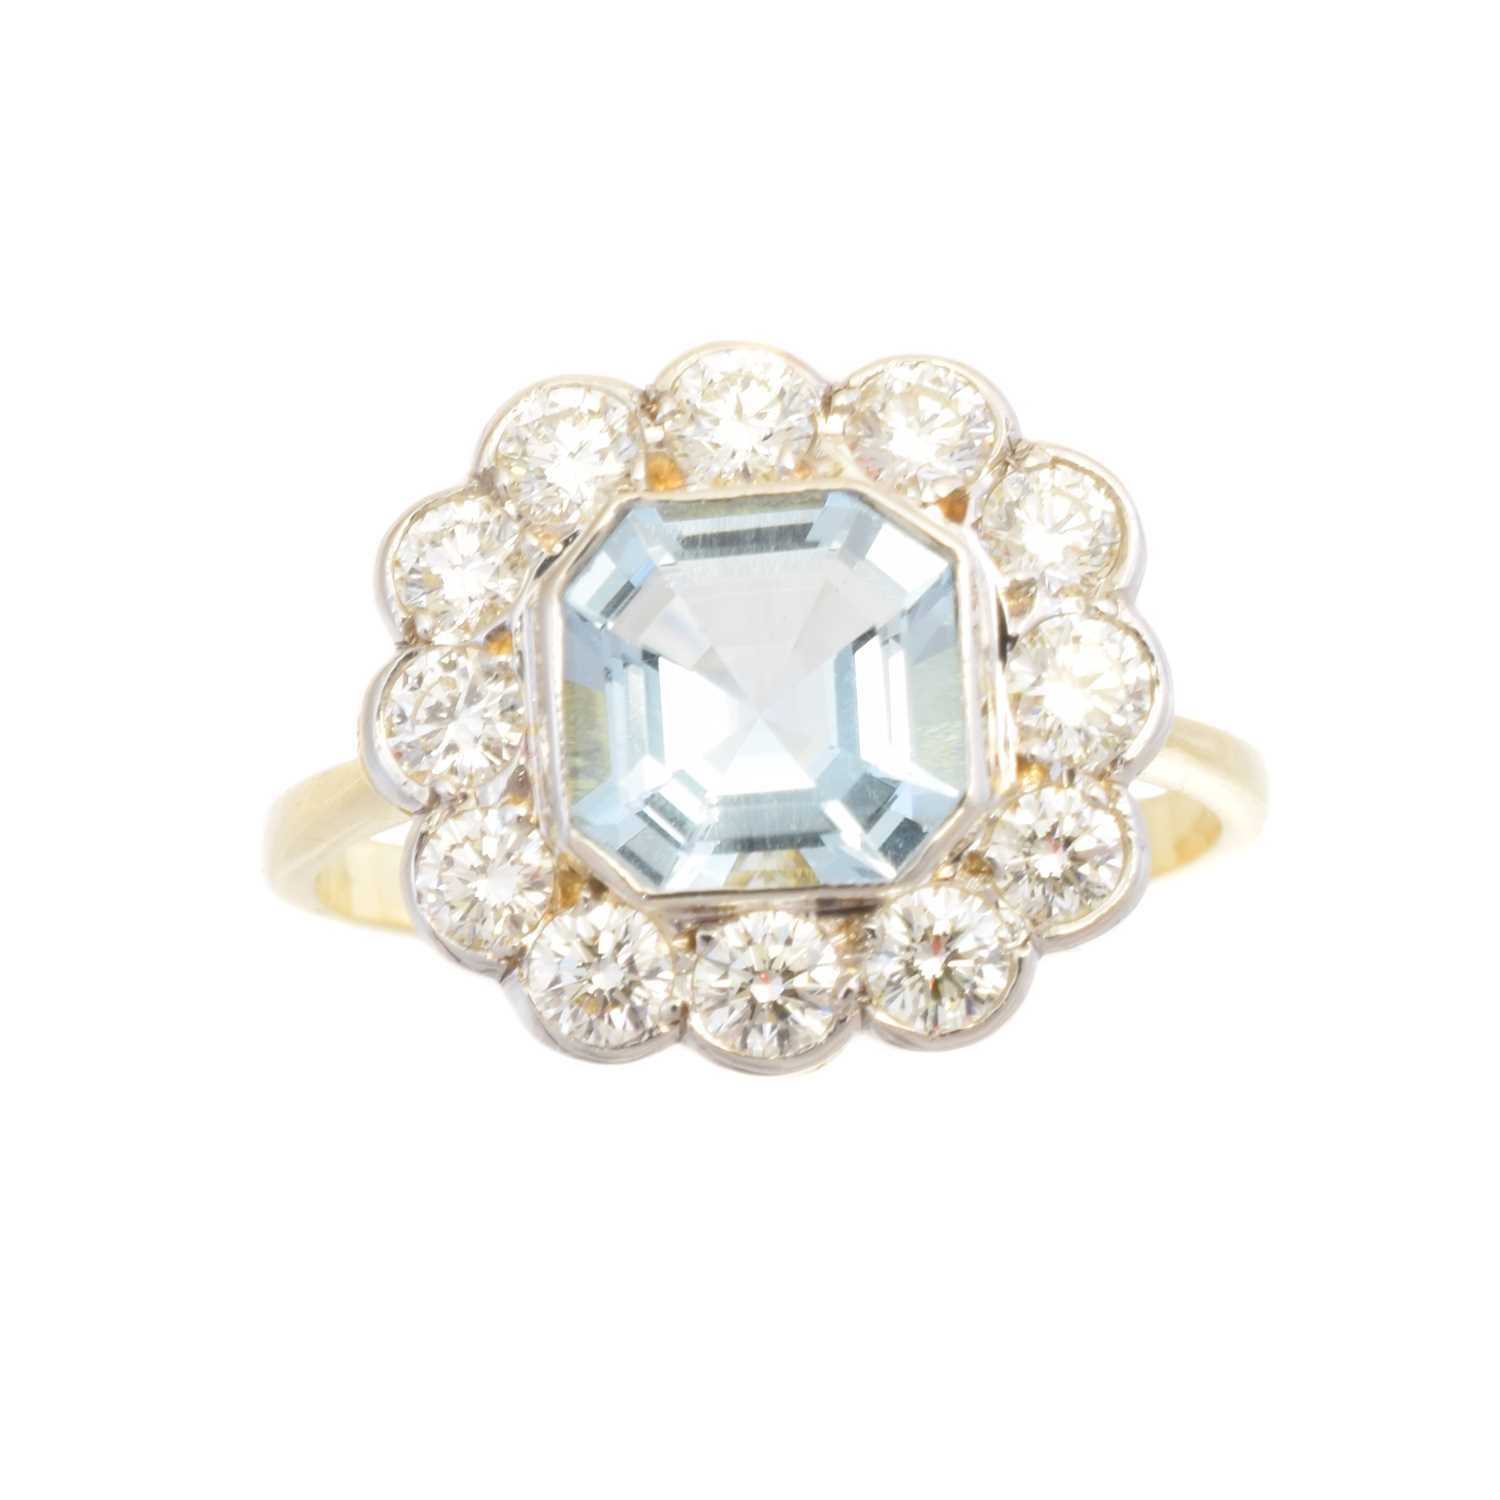 An aquamarine and diamond cluster ring,